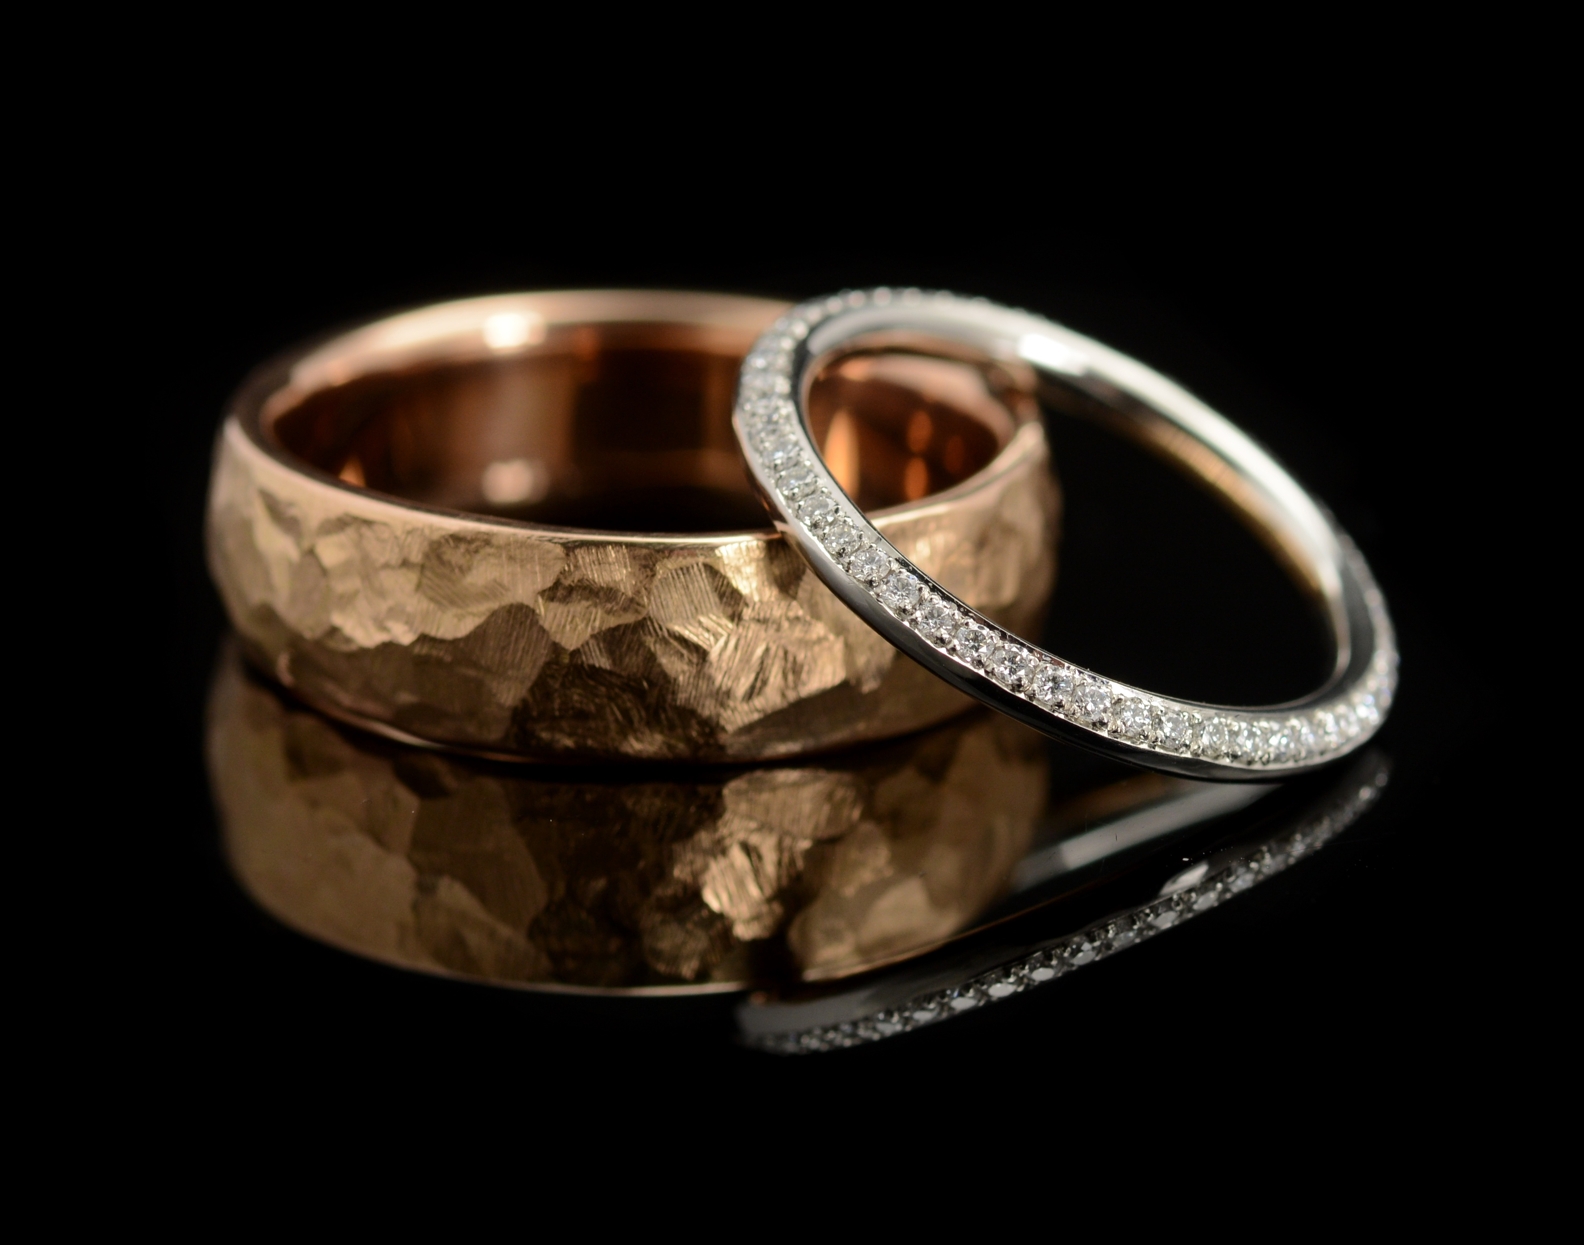 Mens hammered wedding ring and women's diamond wedding ring